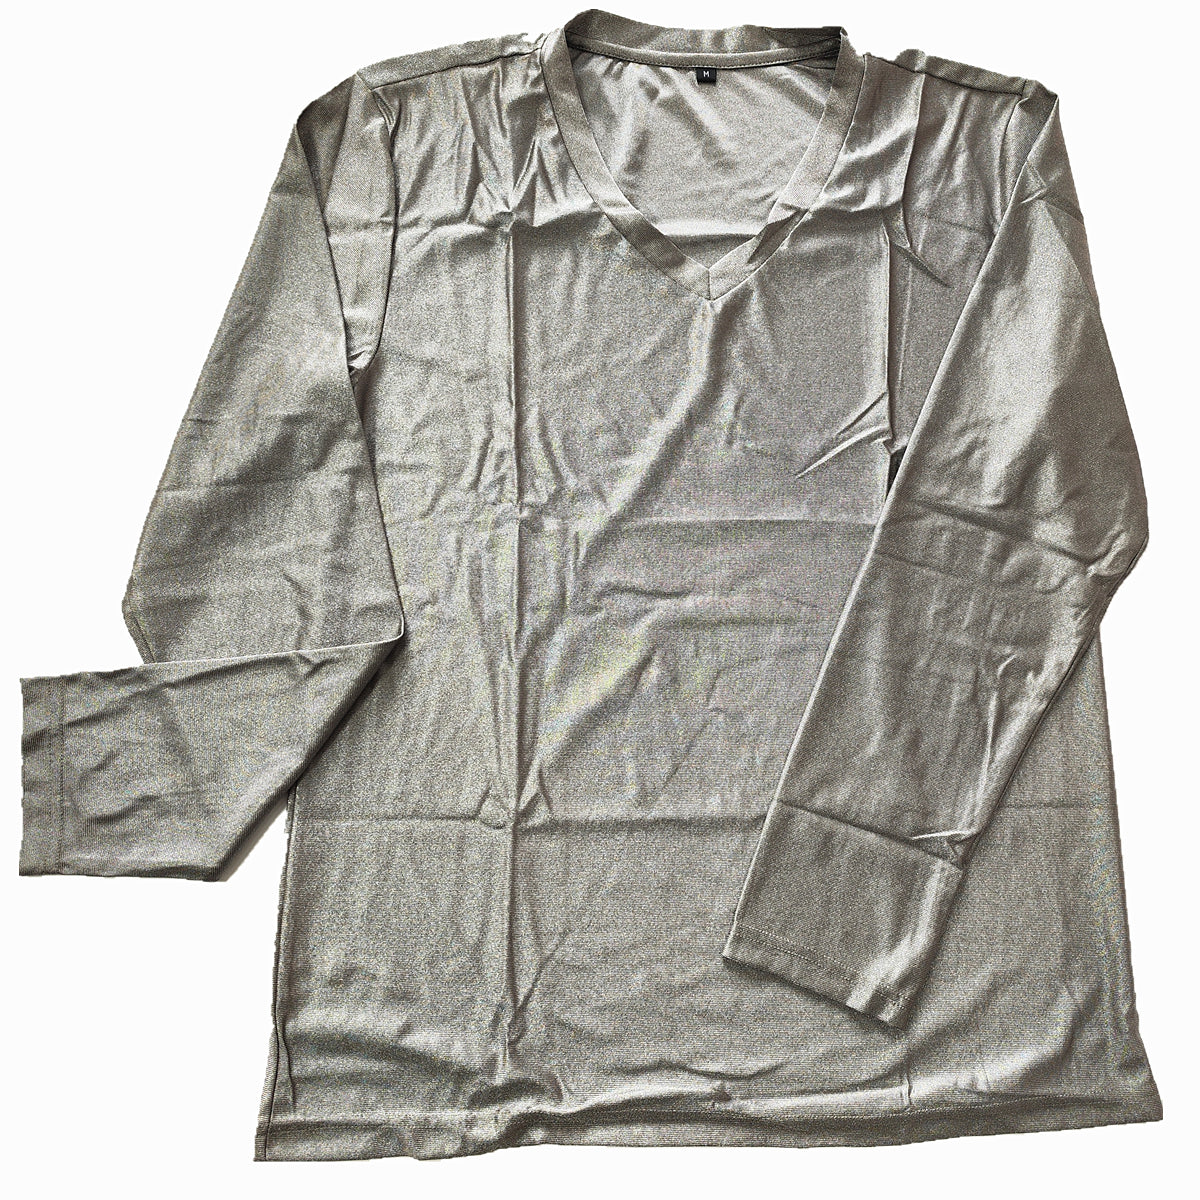  DARZYS EMF Protection Men's Clothing, RF Shielding EMF  Protective Clothing, Silver Fiber Long-Sleeved Underwear : Industrial &  Scientific